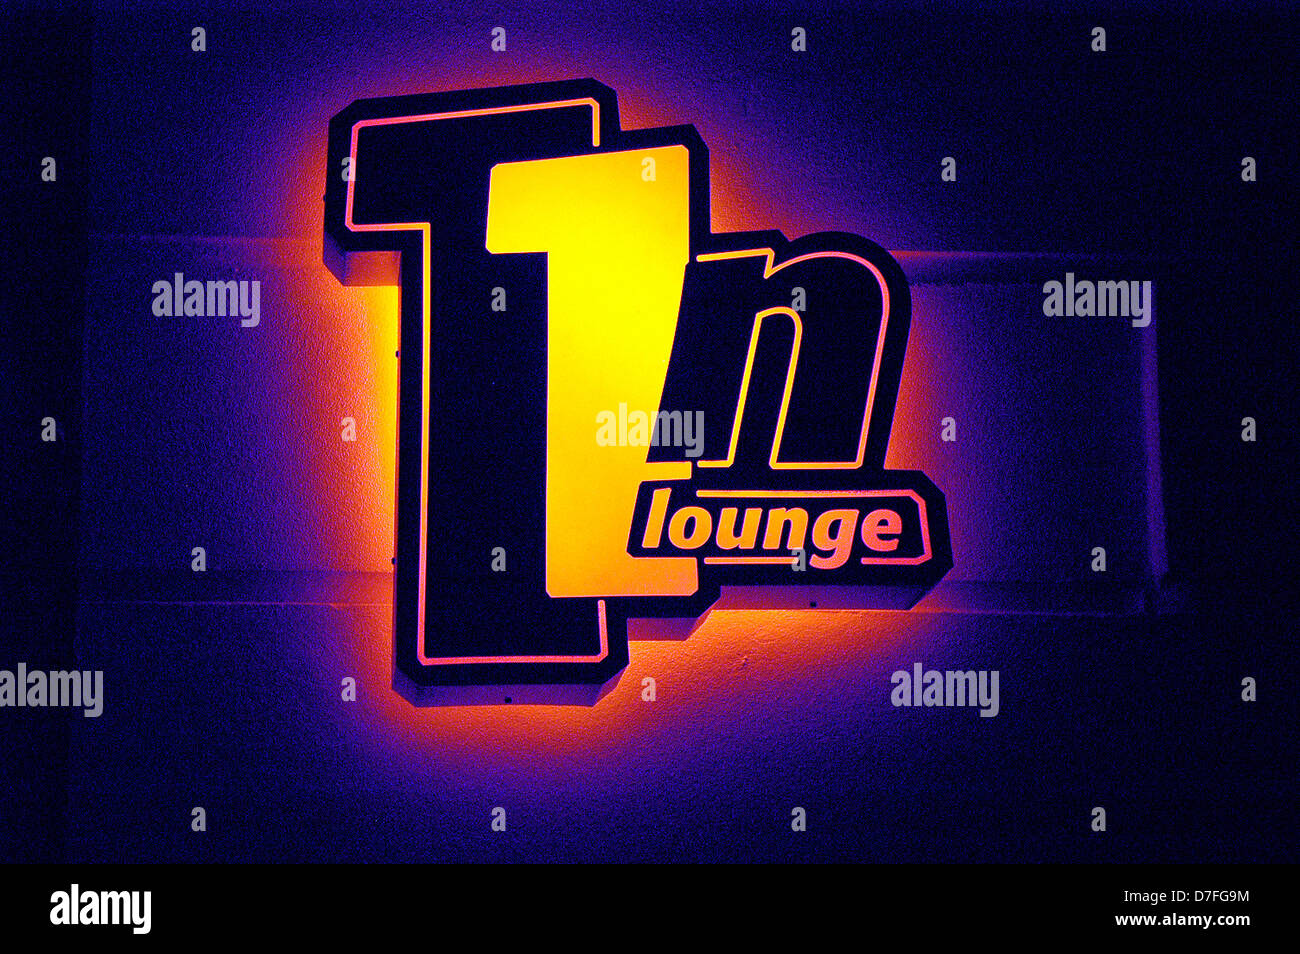 Europe, Germany, Germany, Berlin, stroke, neon light, neon sign, 11N lounge Stock Photo